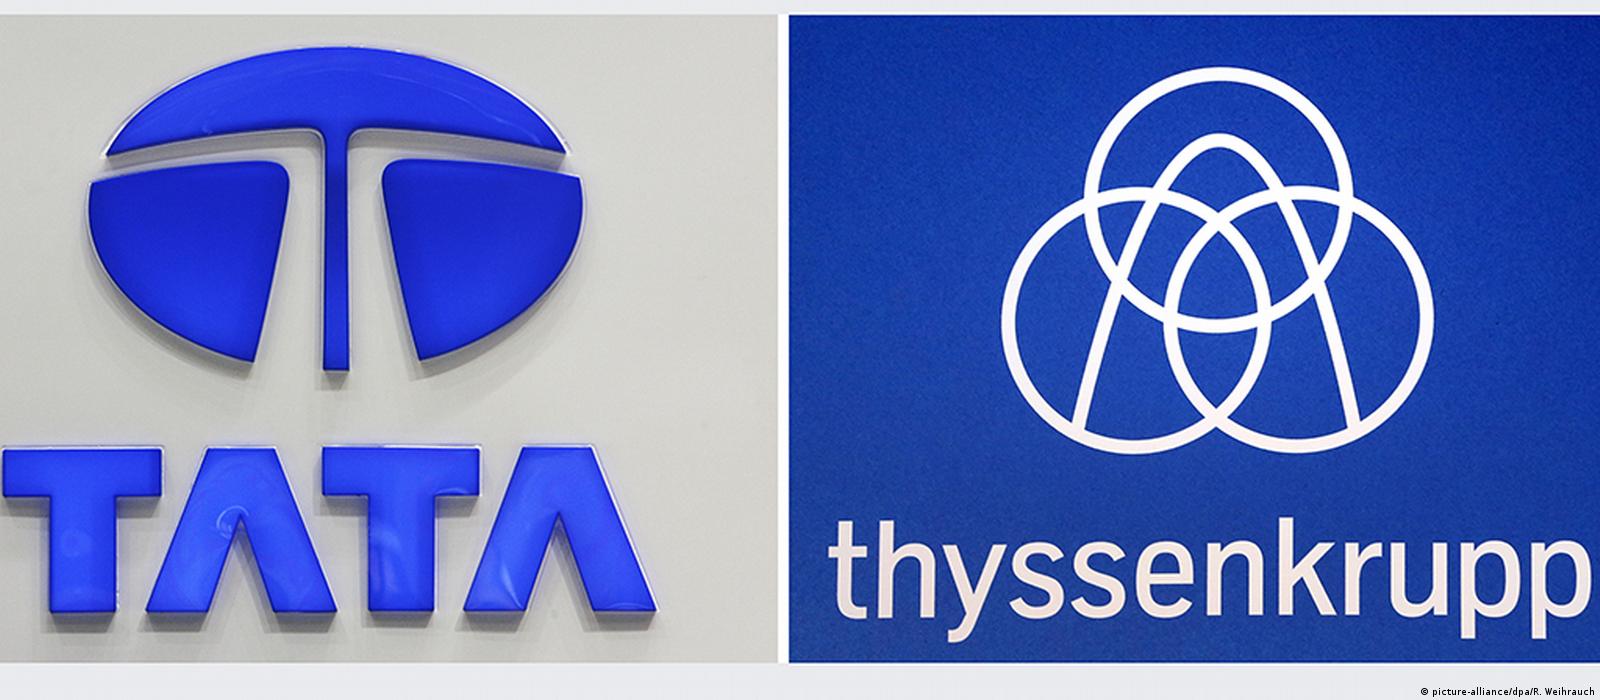 Tata Steel Europe, Logopedia